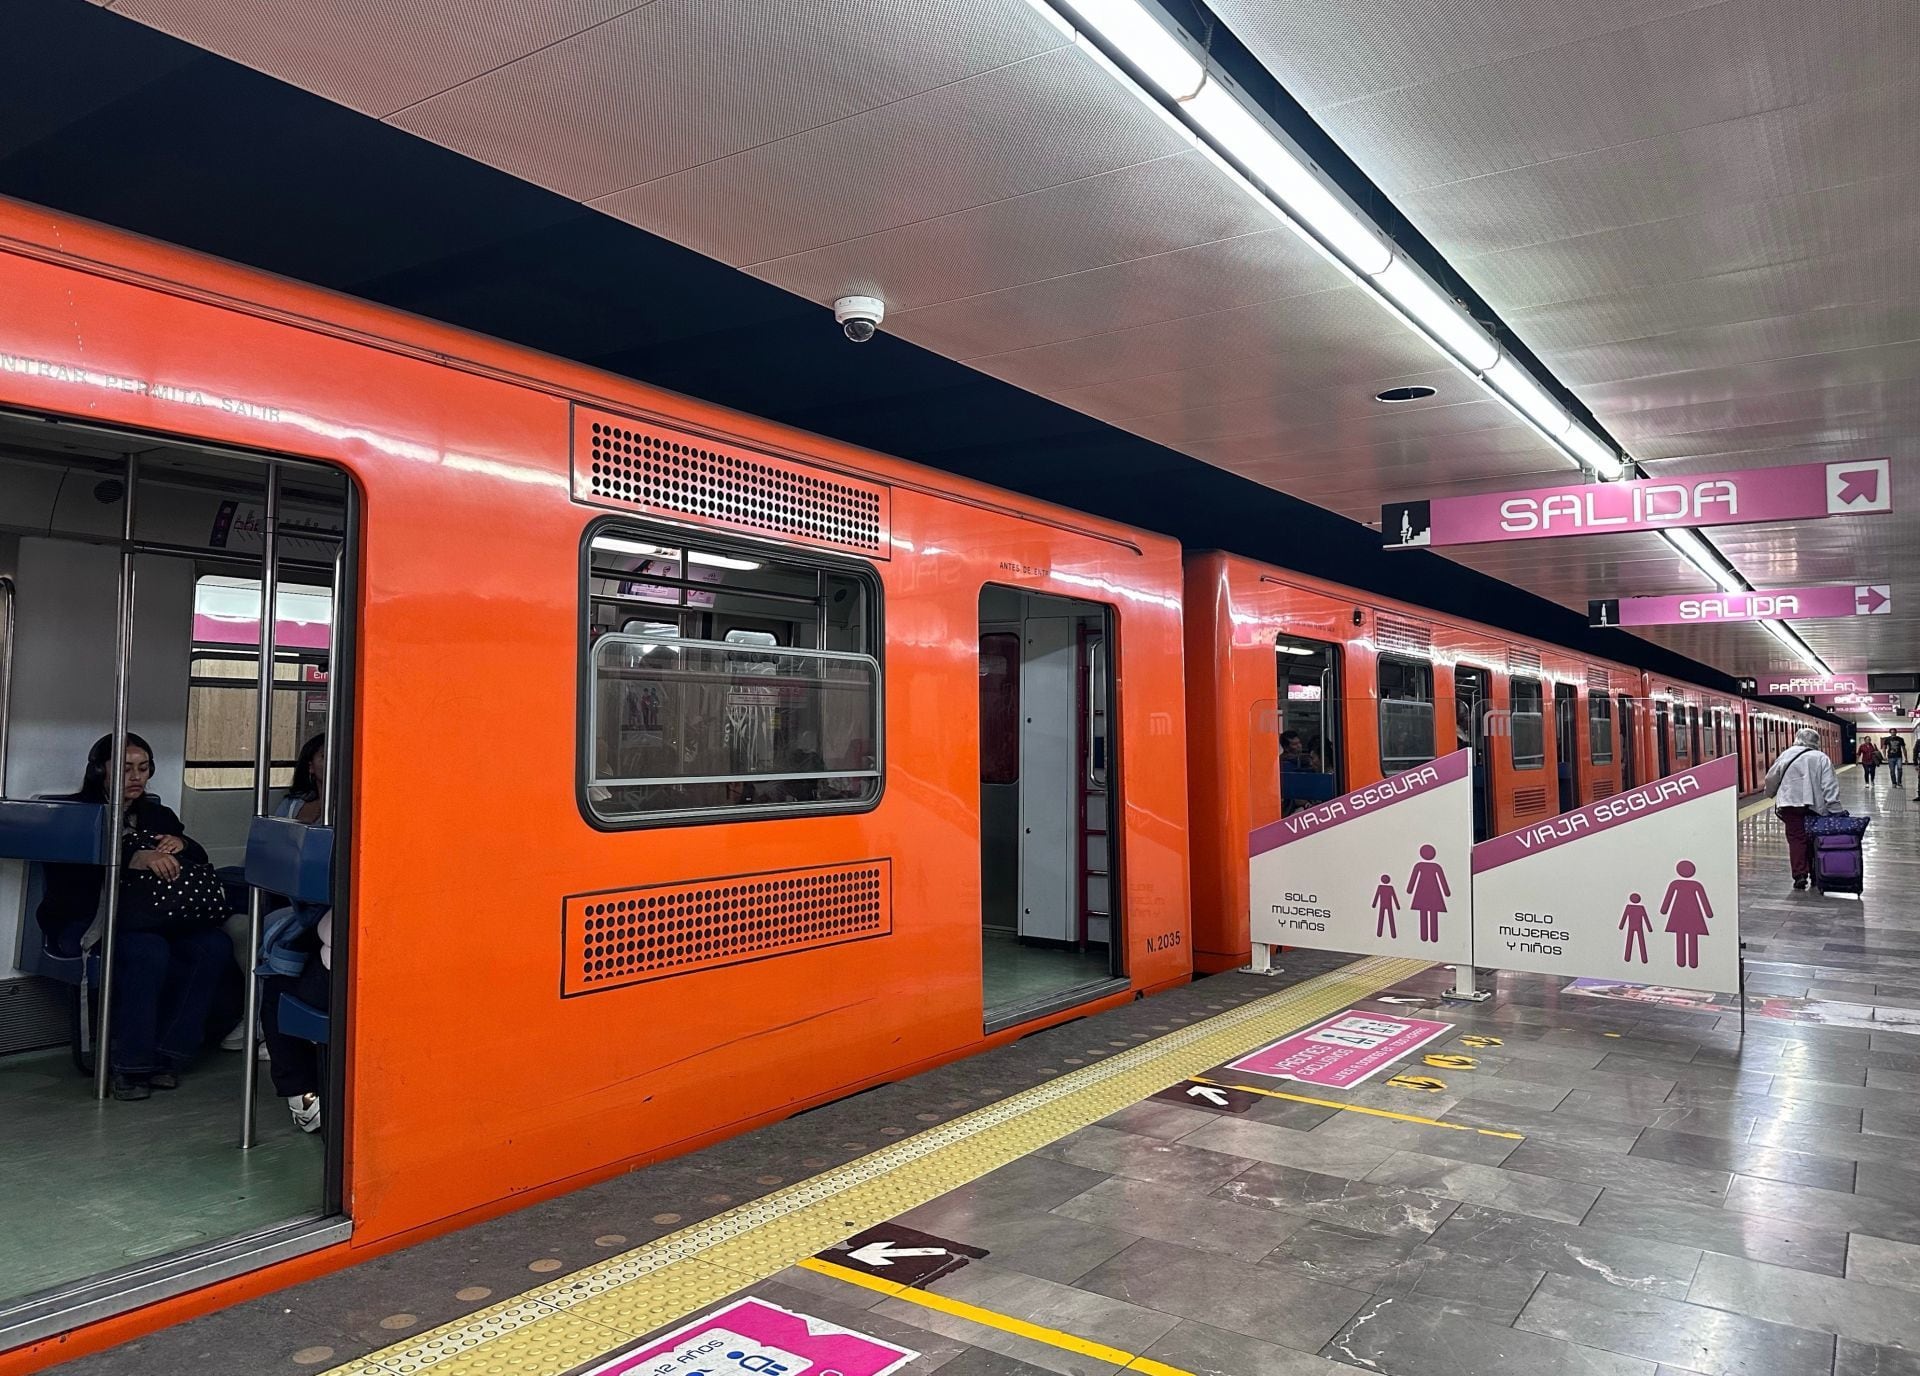 Metro de CDMX avanza ‘lentísimo’ en pleno inicio de semana: ¿Qué líneas son afectadas hoy 15 de julio?